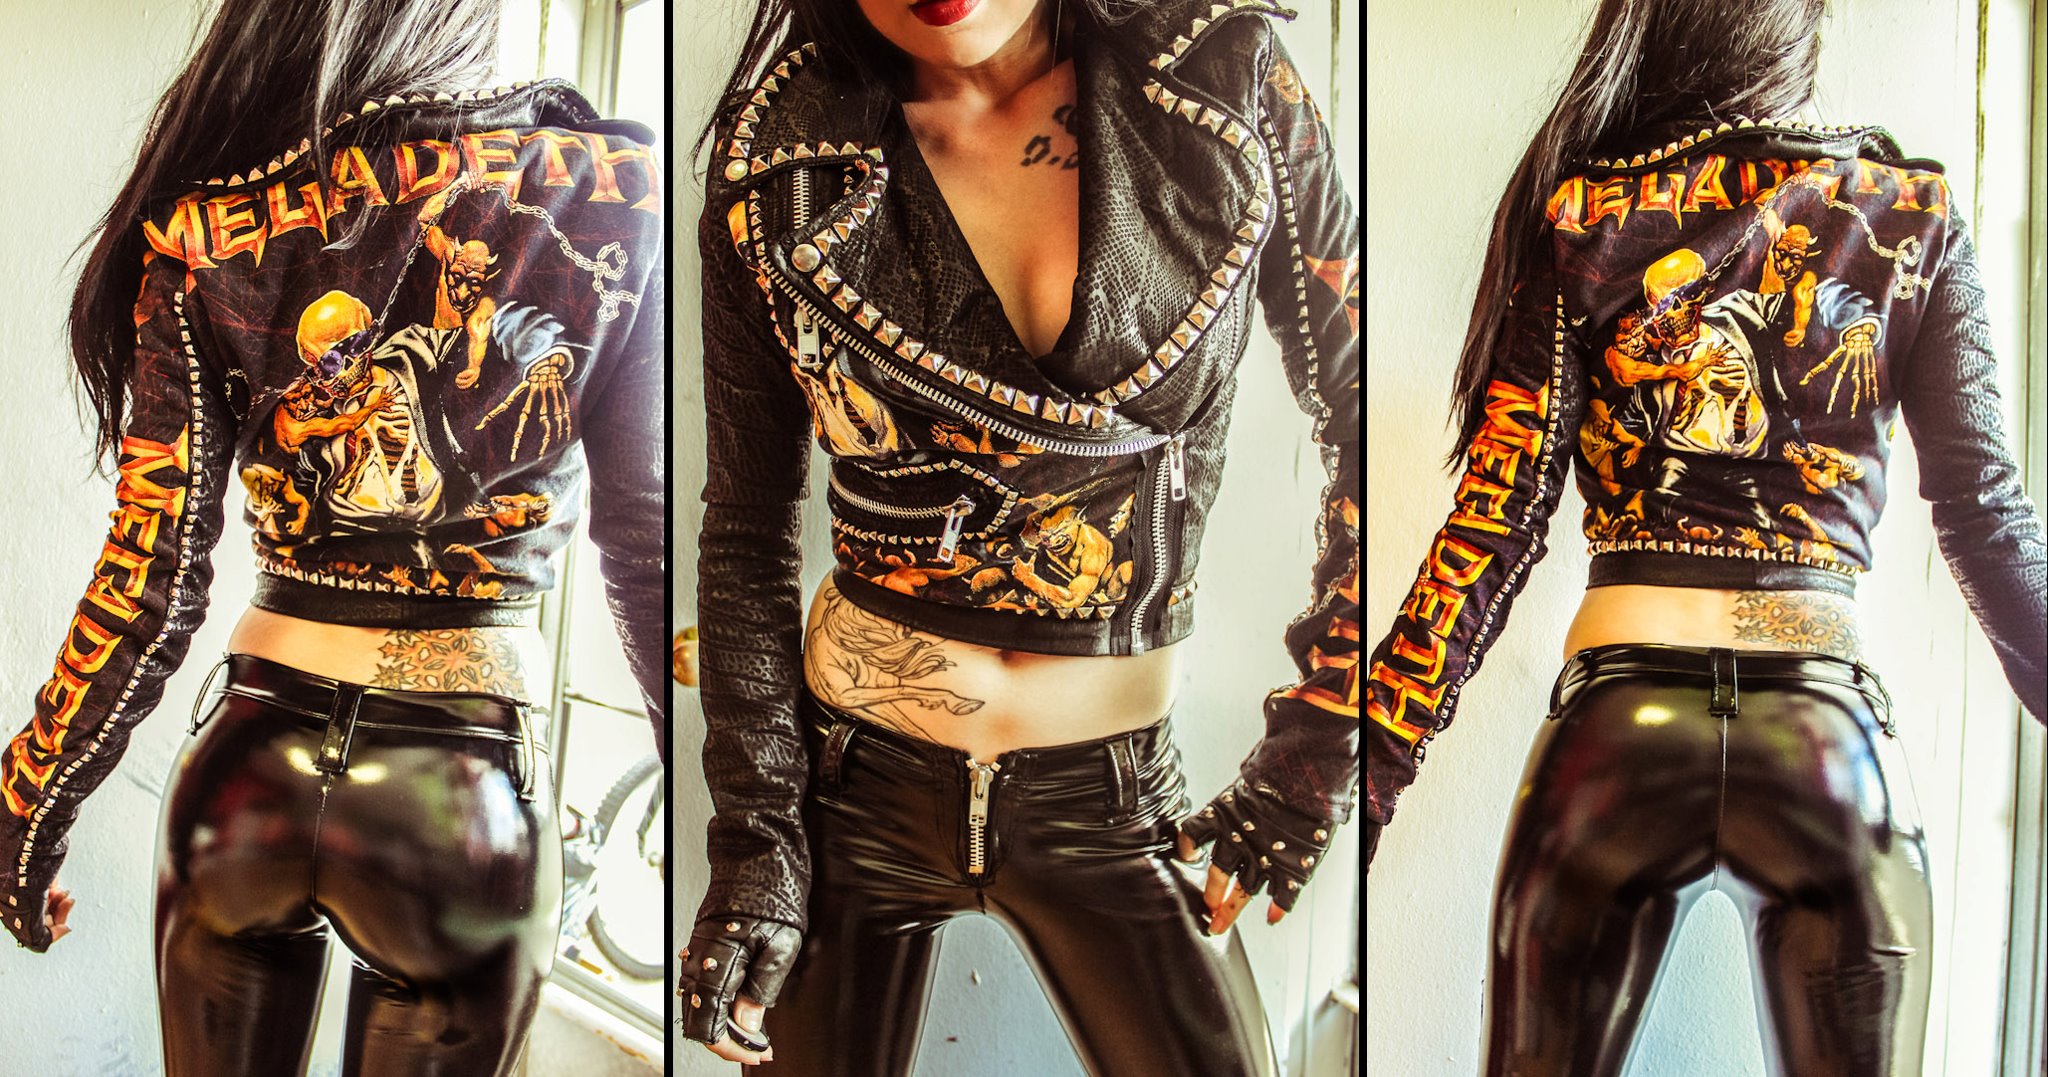 Leather jacket biker slut sucking cock photo